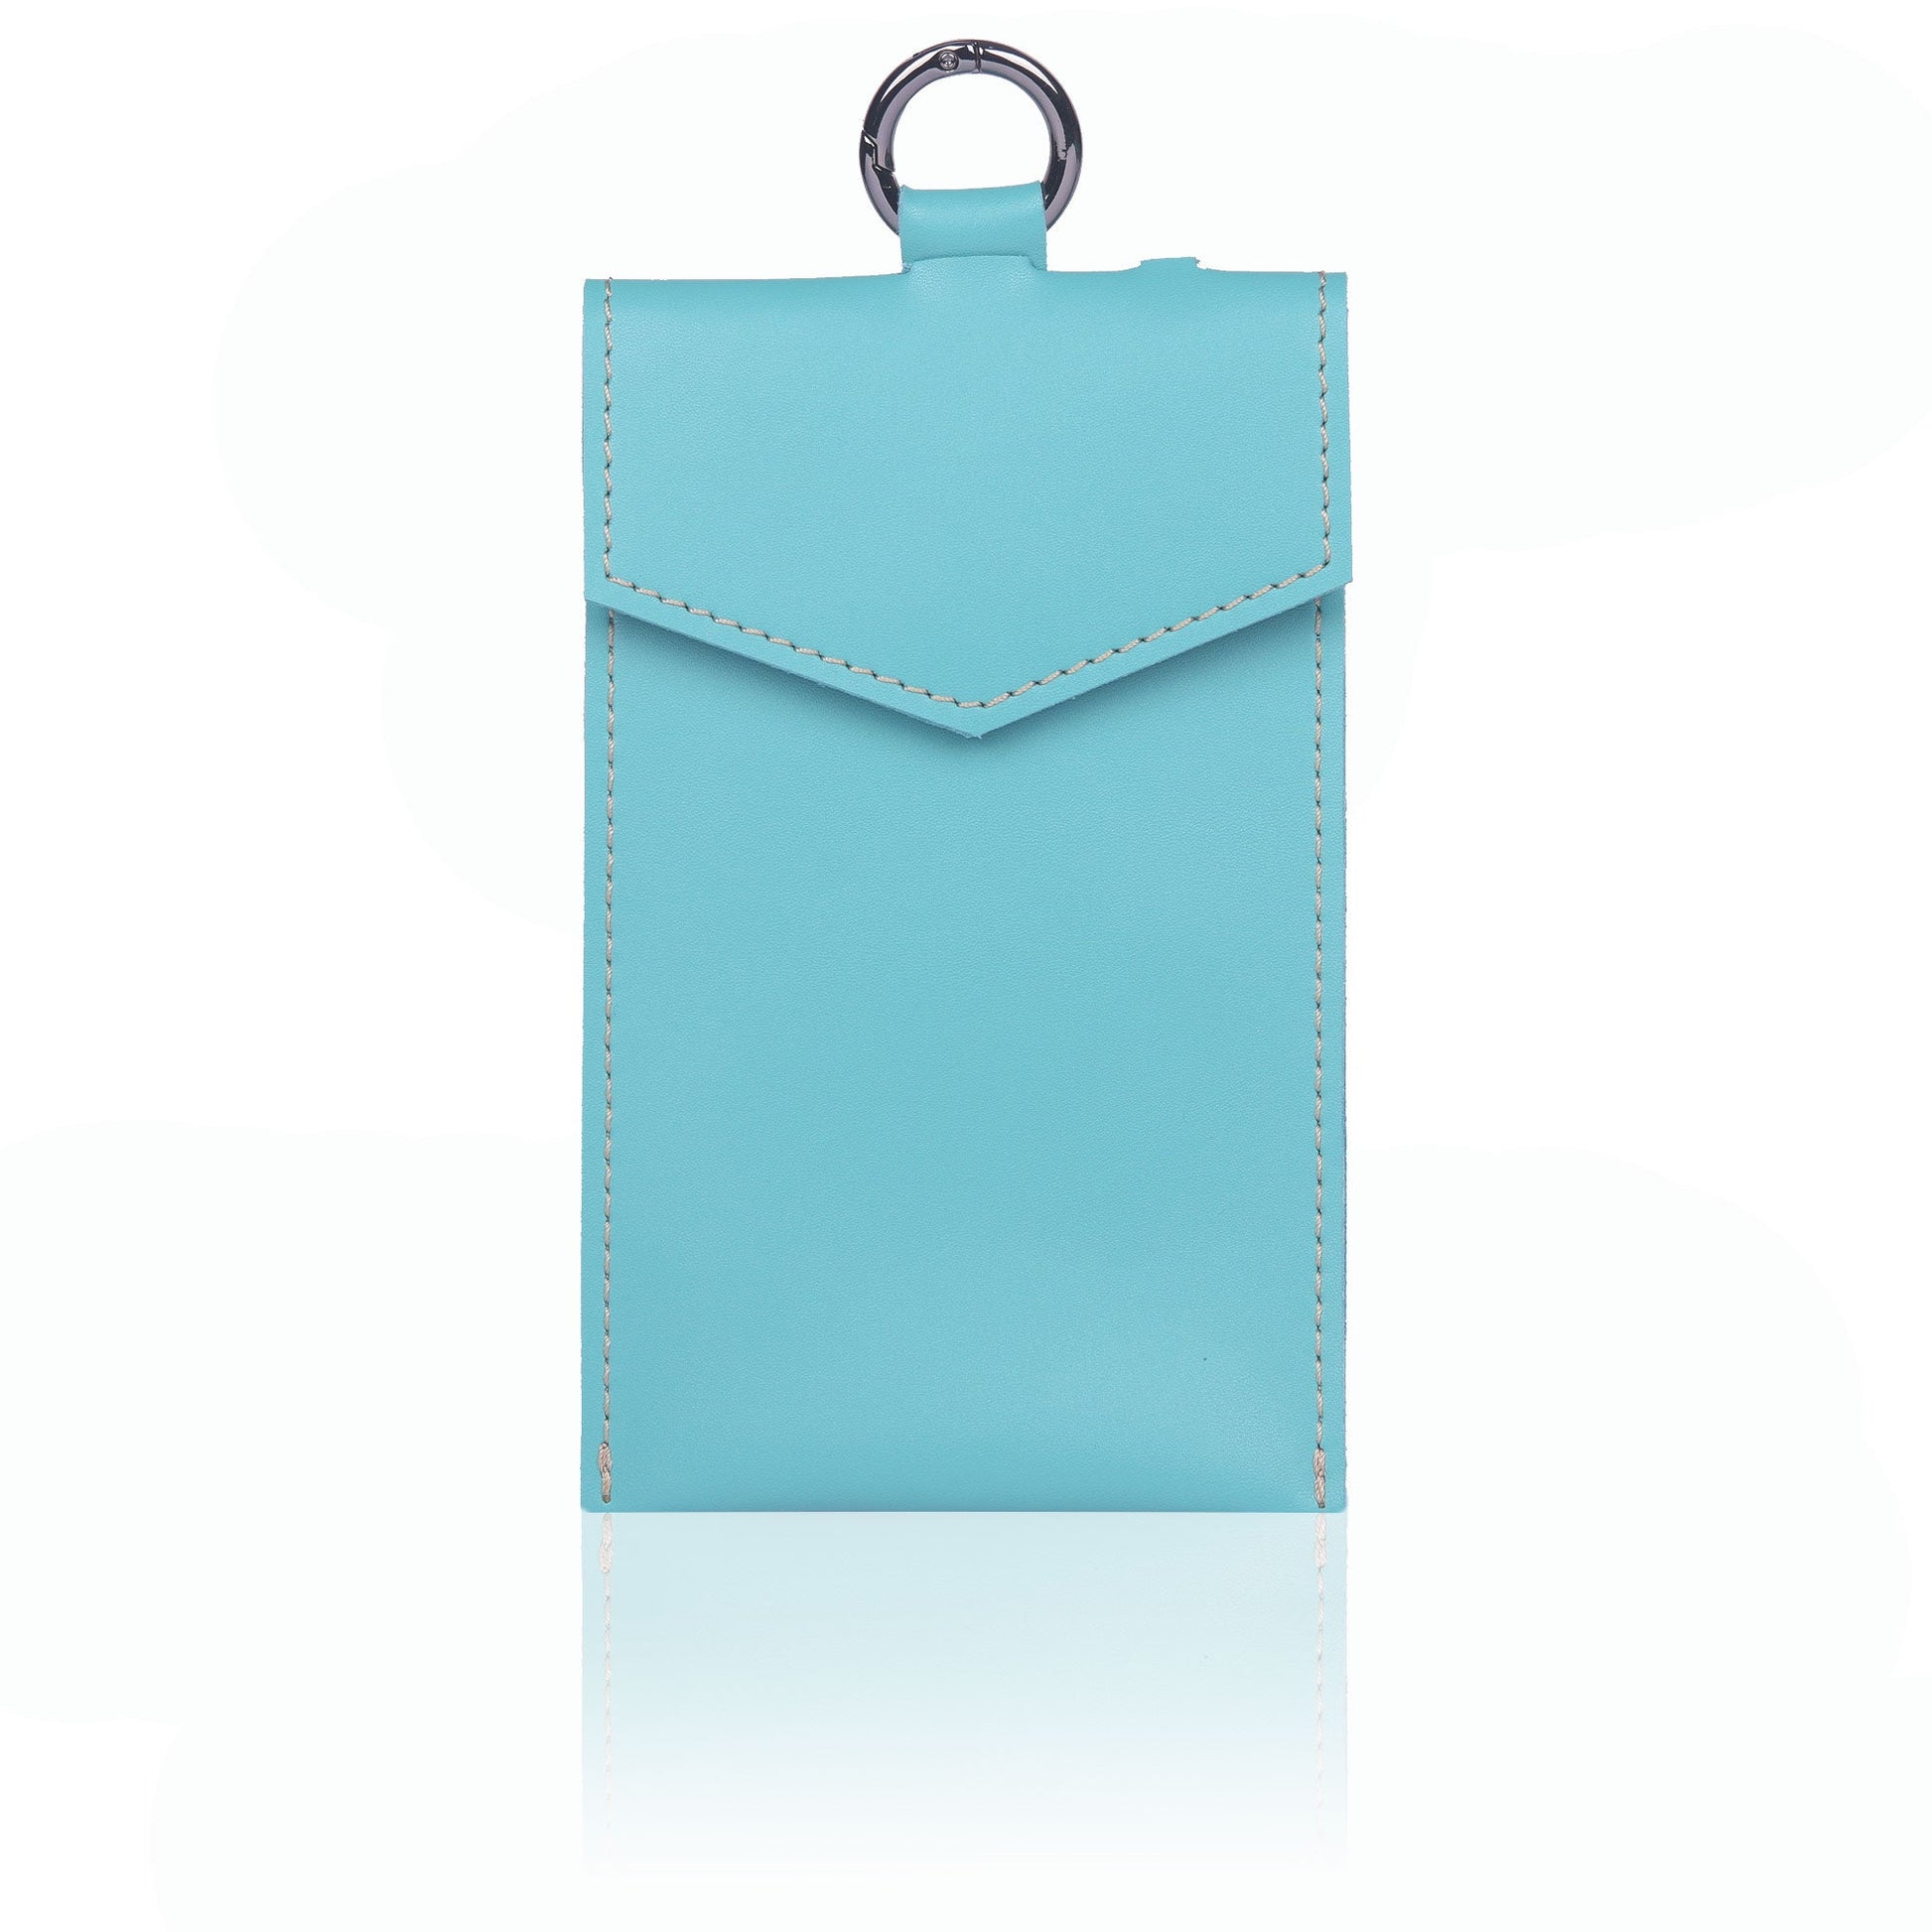 Phone cover - Premium Bags & accessories from L&E Studio